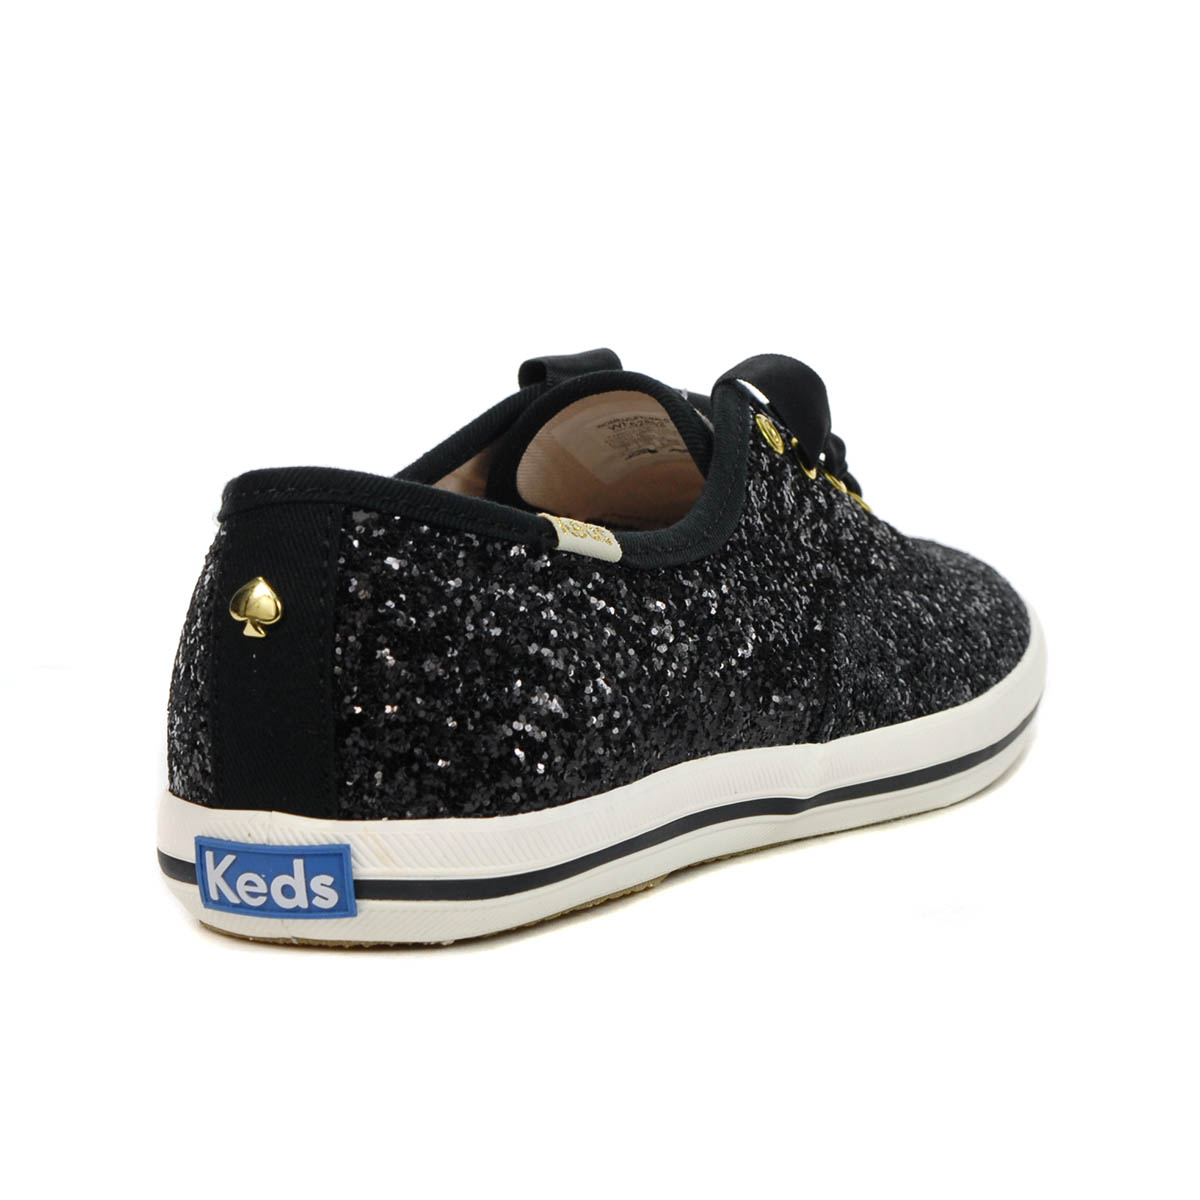 Keds x Kate Spade New York Champion Black Glitter Sneakers WF52882 -  